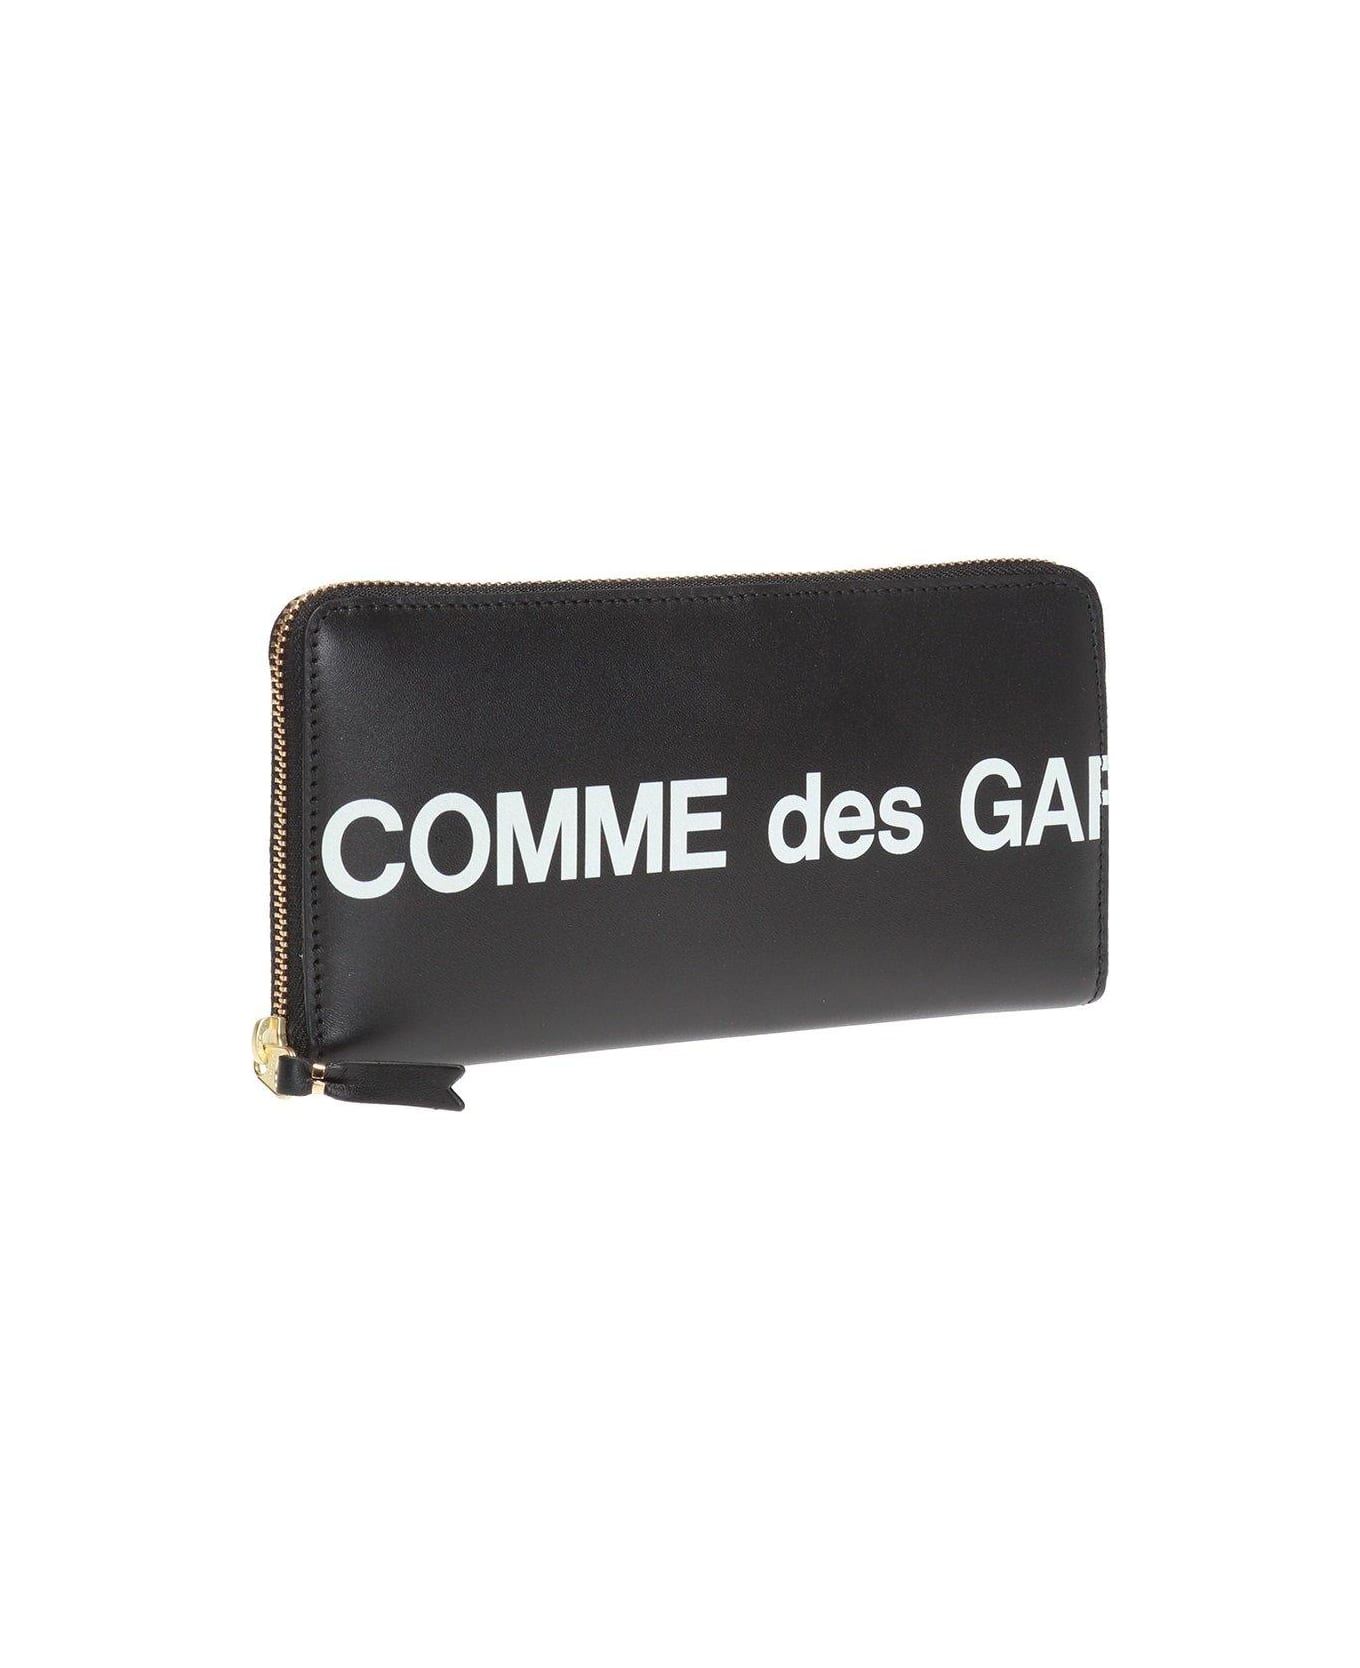 Comme des Garçons Wallet Logo Printed Zipped Wallet 財布